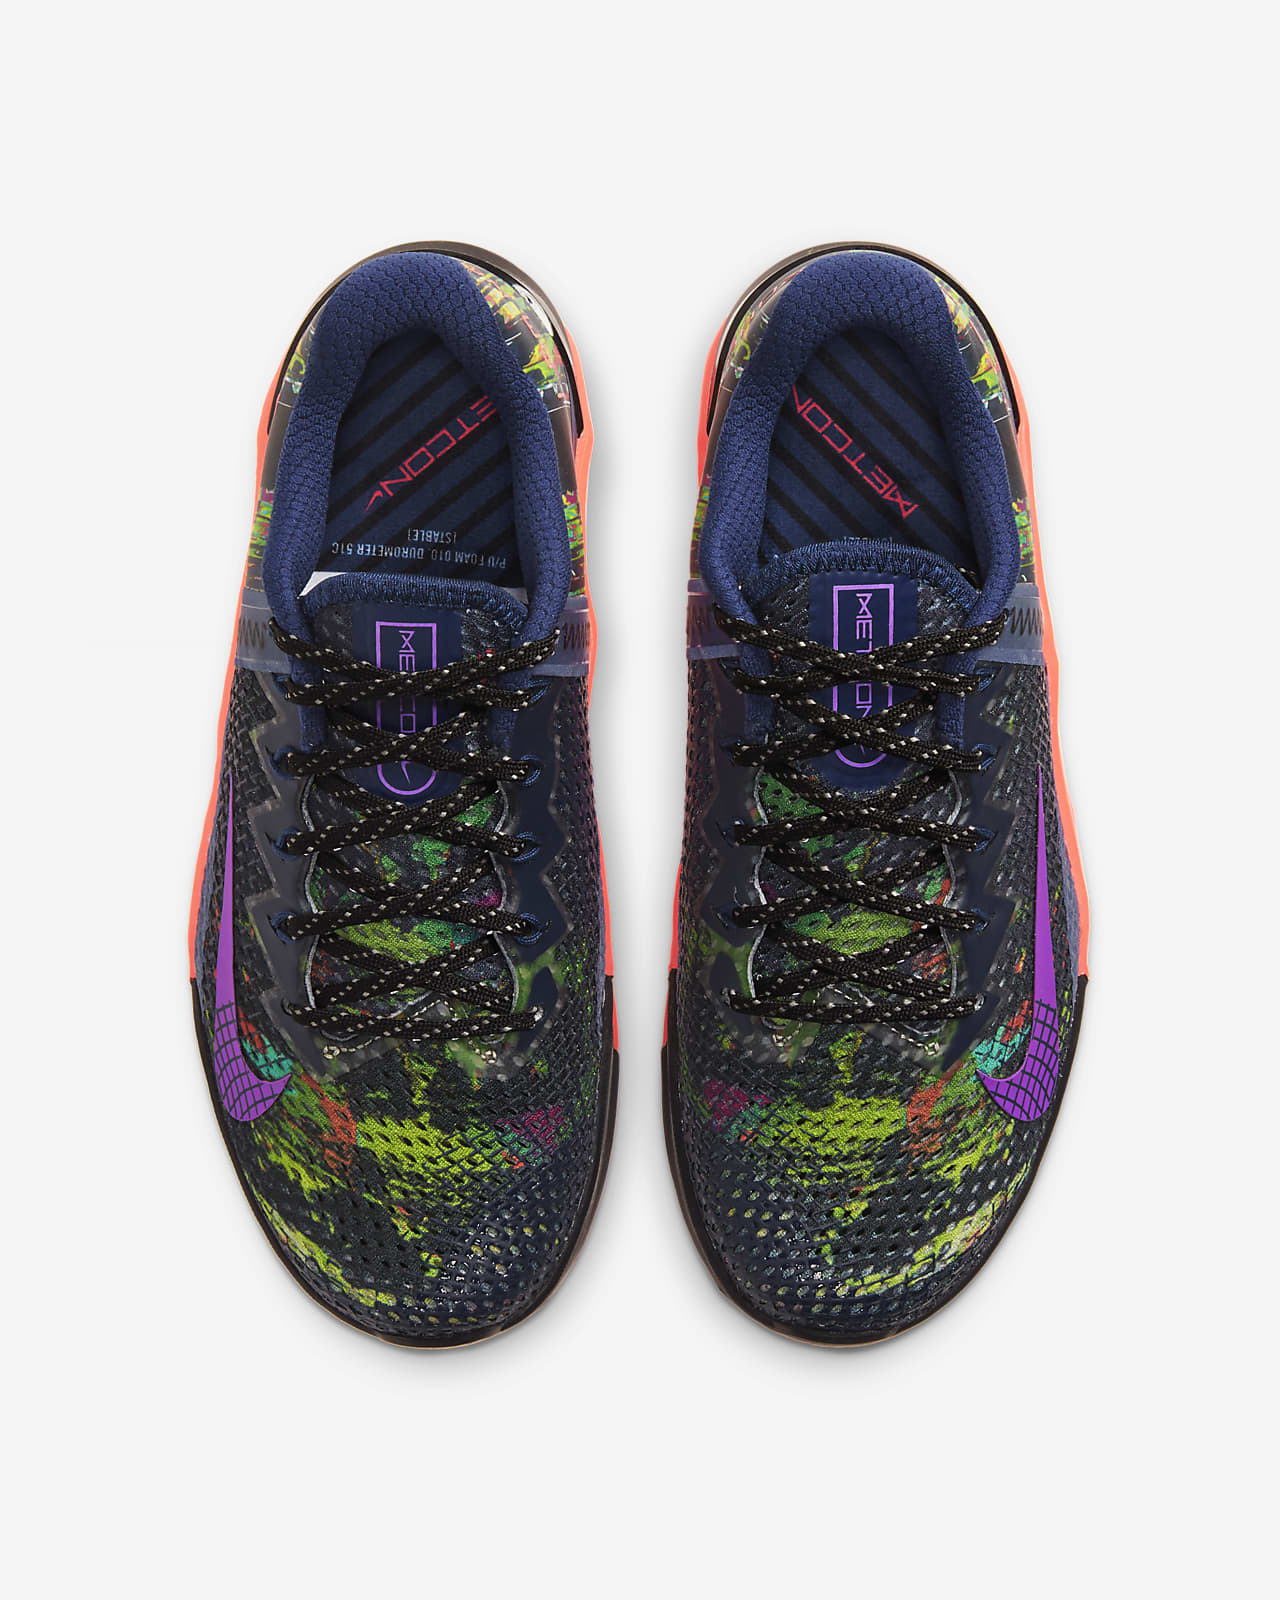 Nike Metcon 6 AMP Women's Training Shoe 